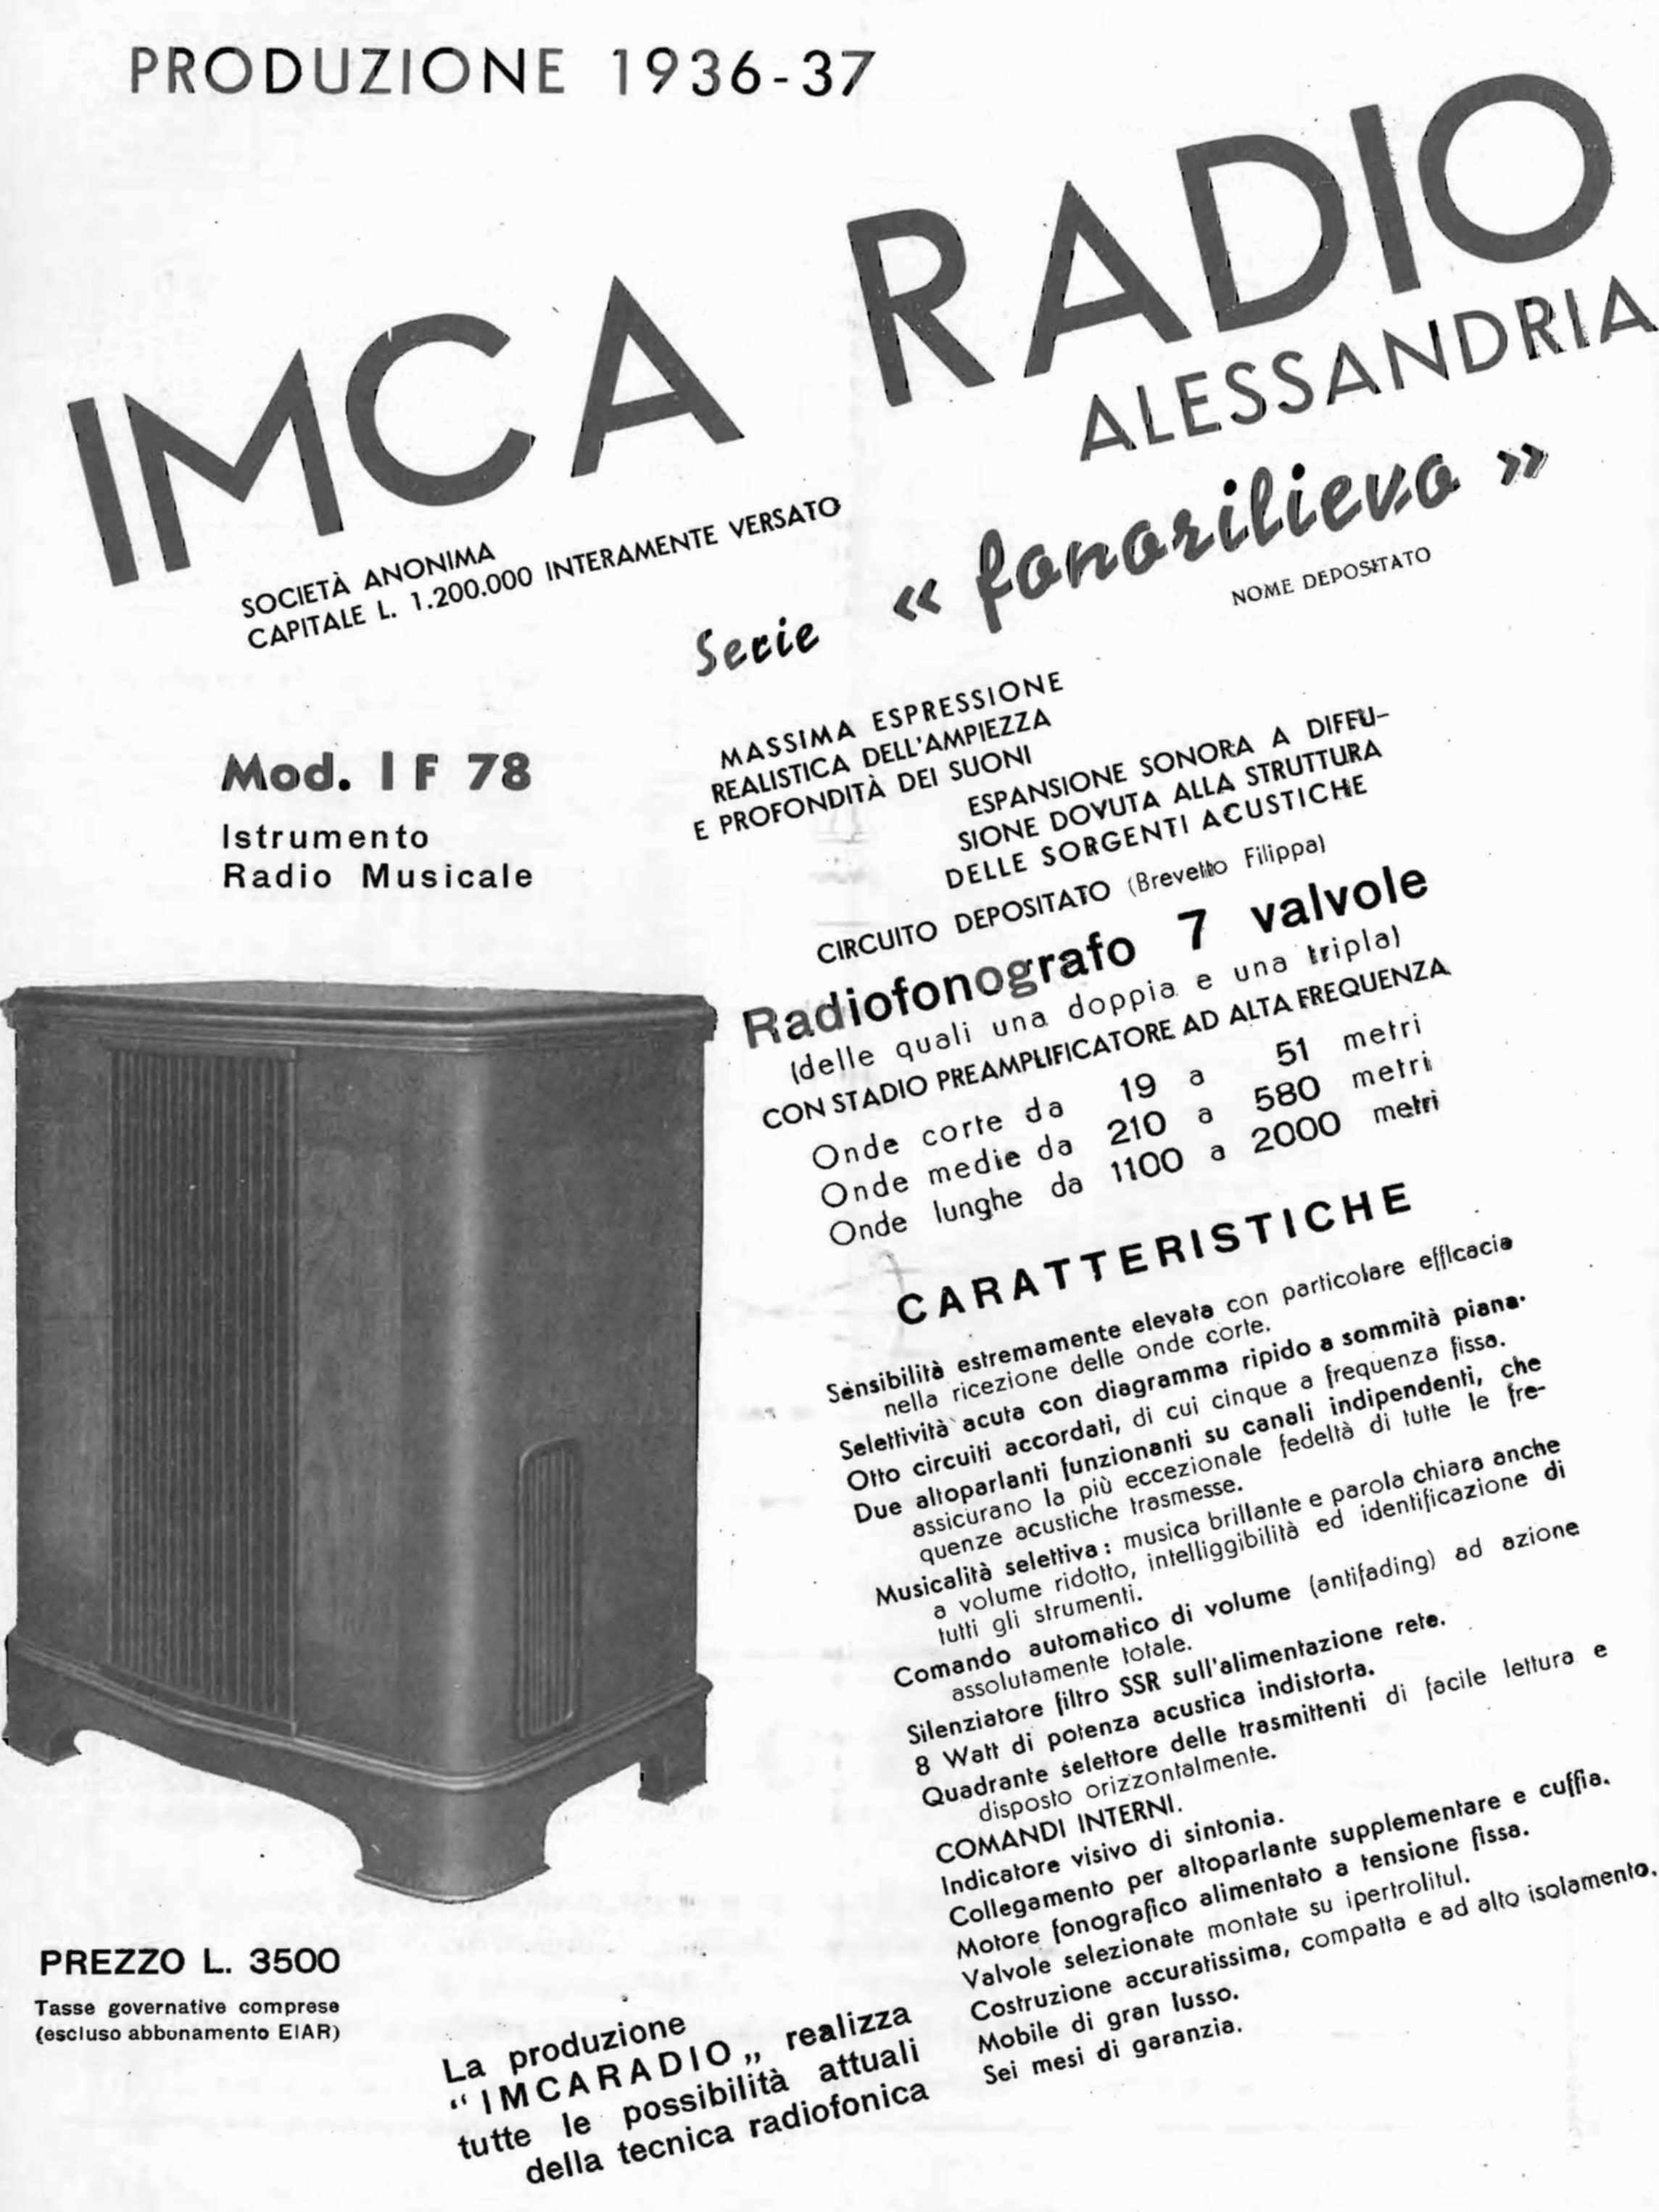 Imcaradio 1936 573.jpg